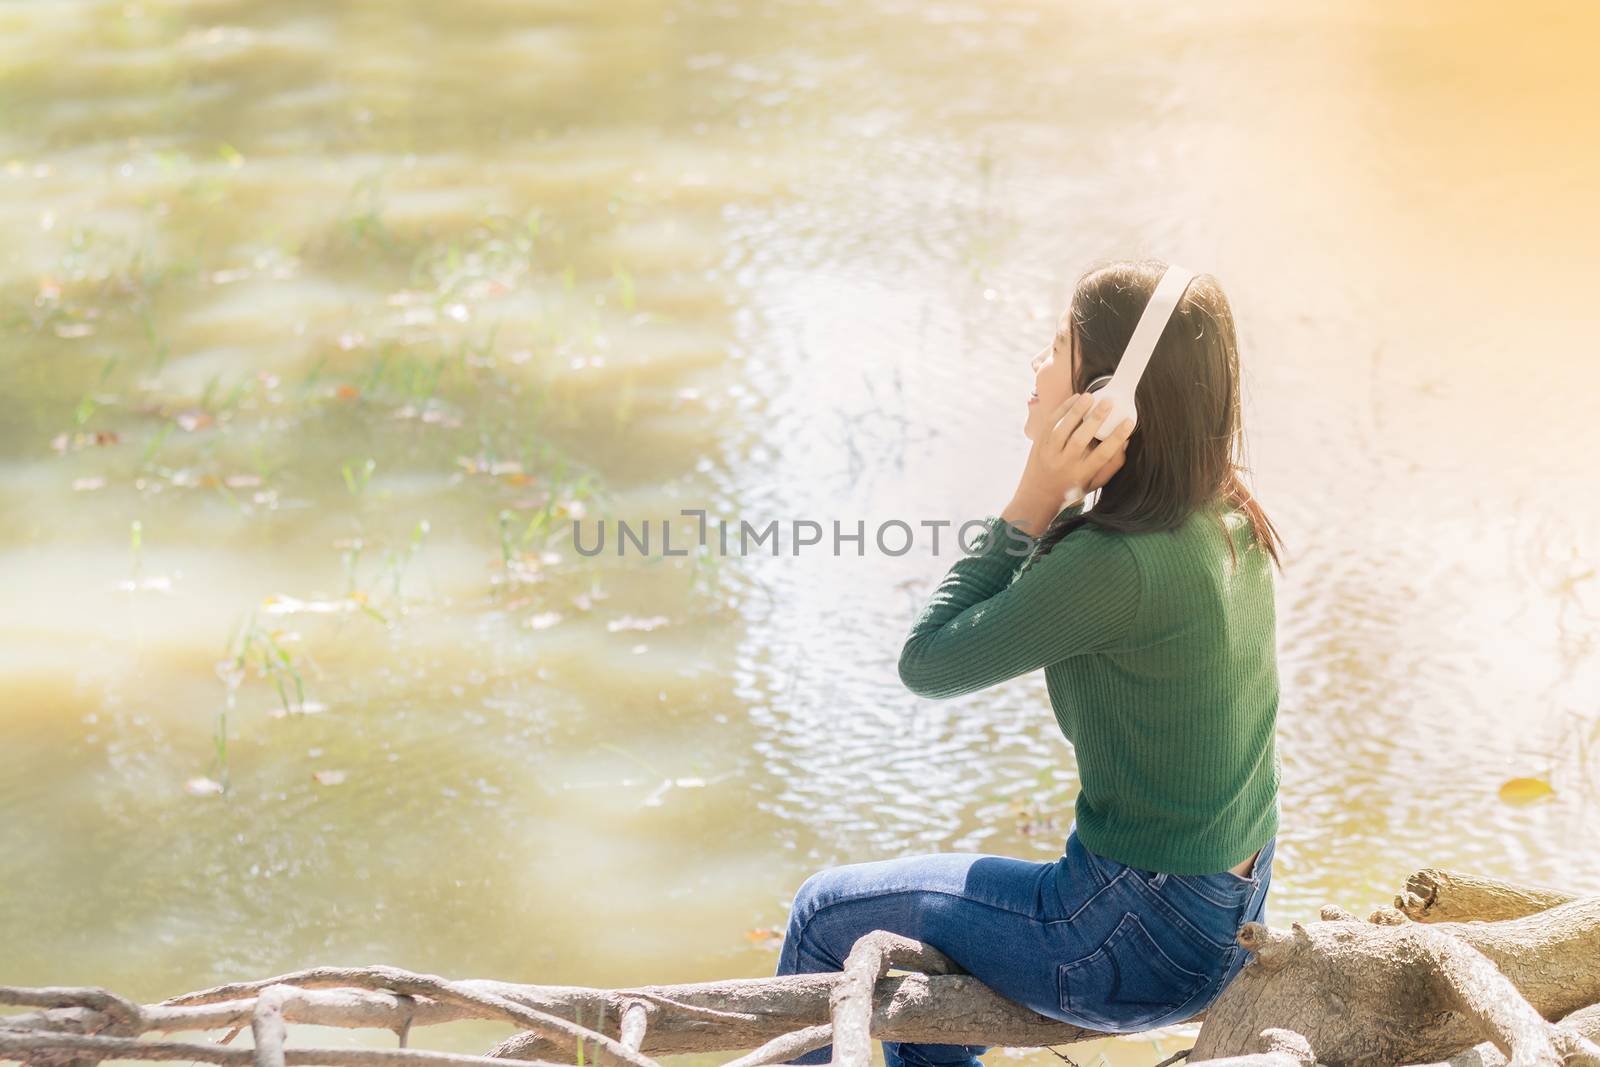 Young beautiful woman girl listening music headphones outdoor by Kumma